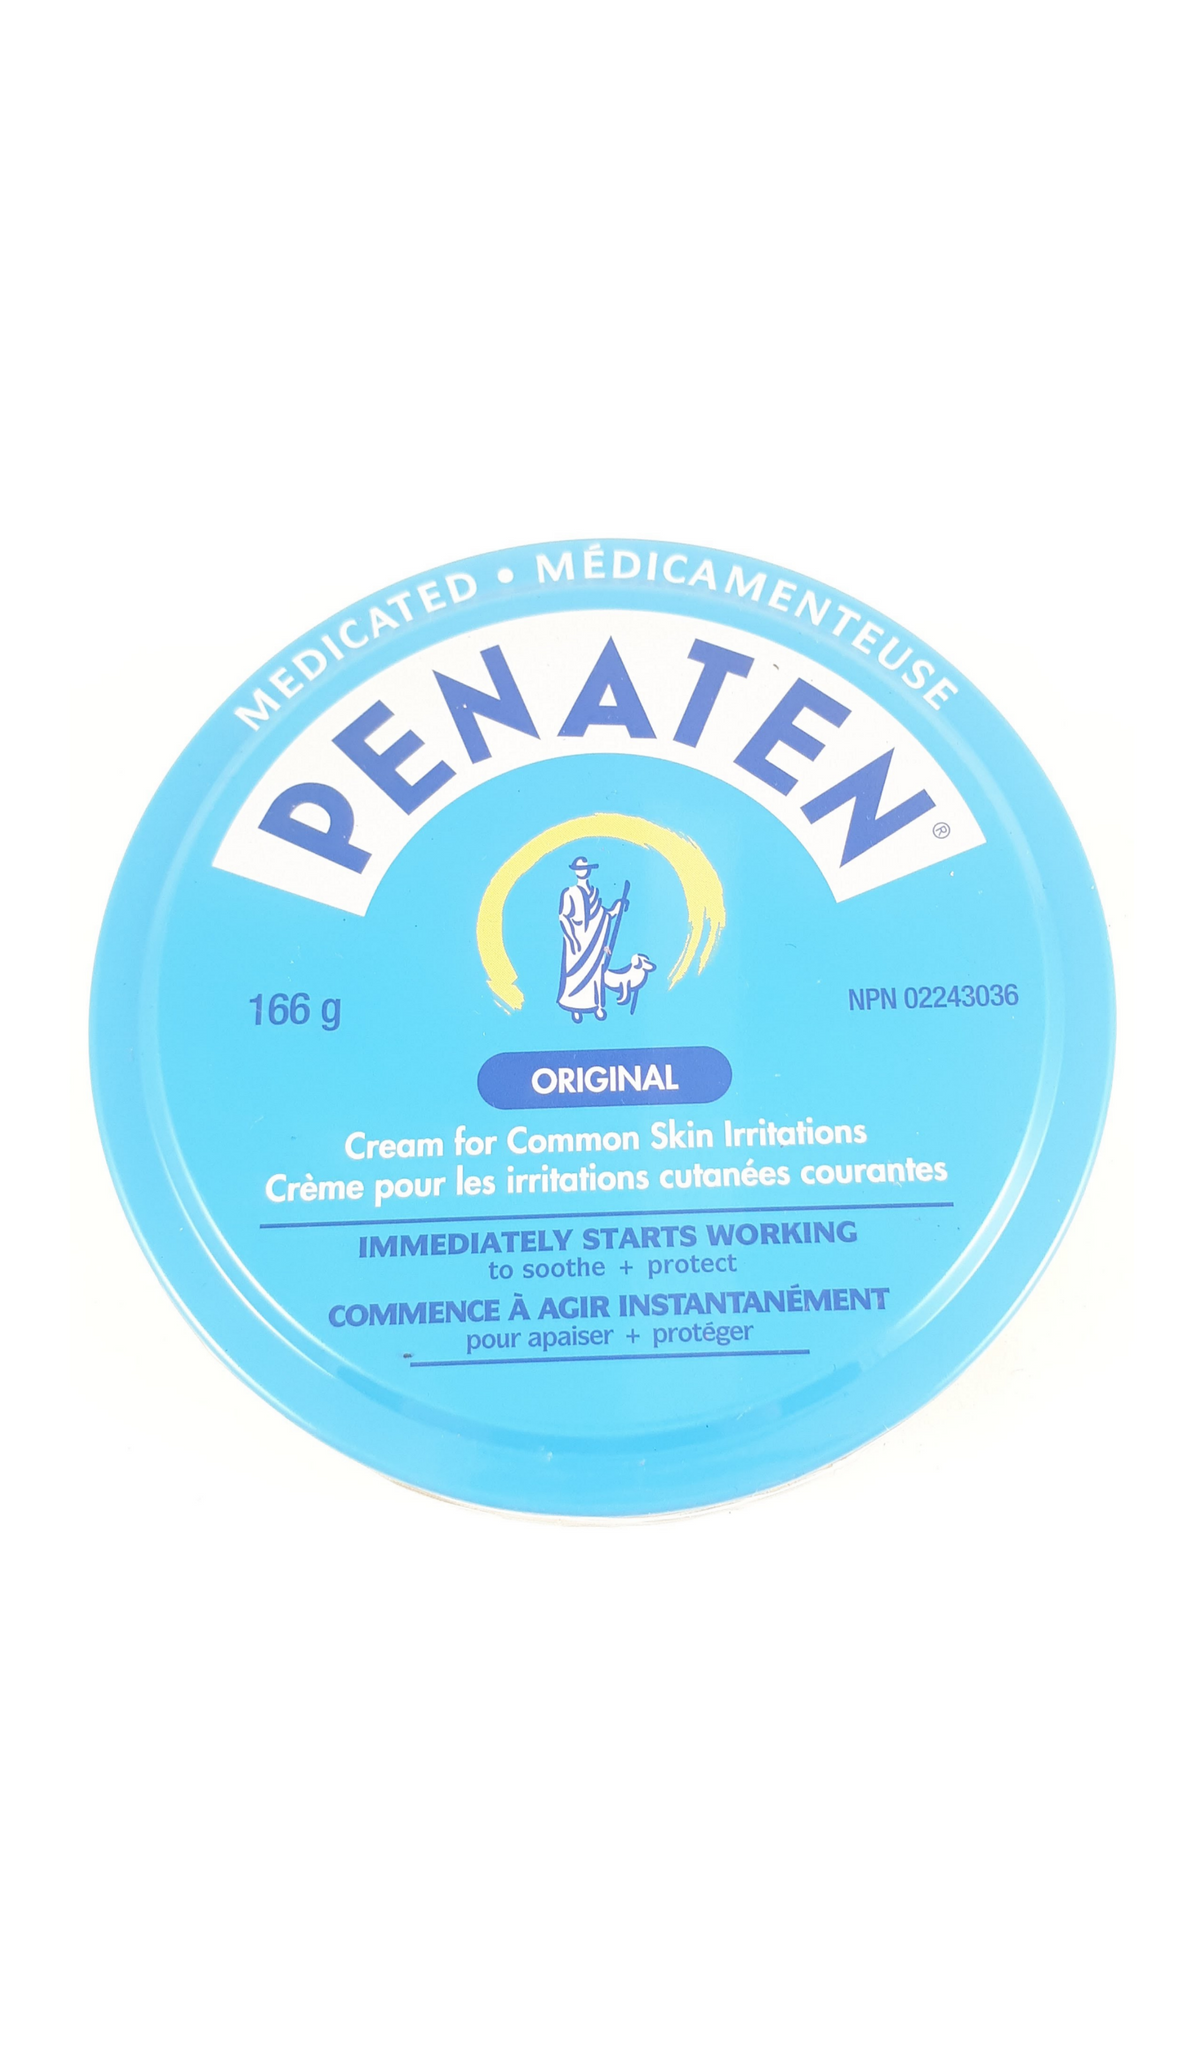 Penaten Cream – Green Valley Pharmacy